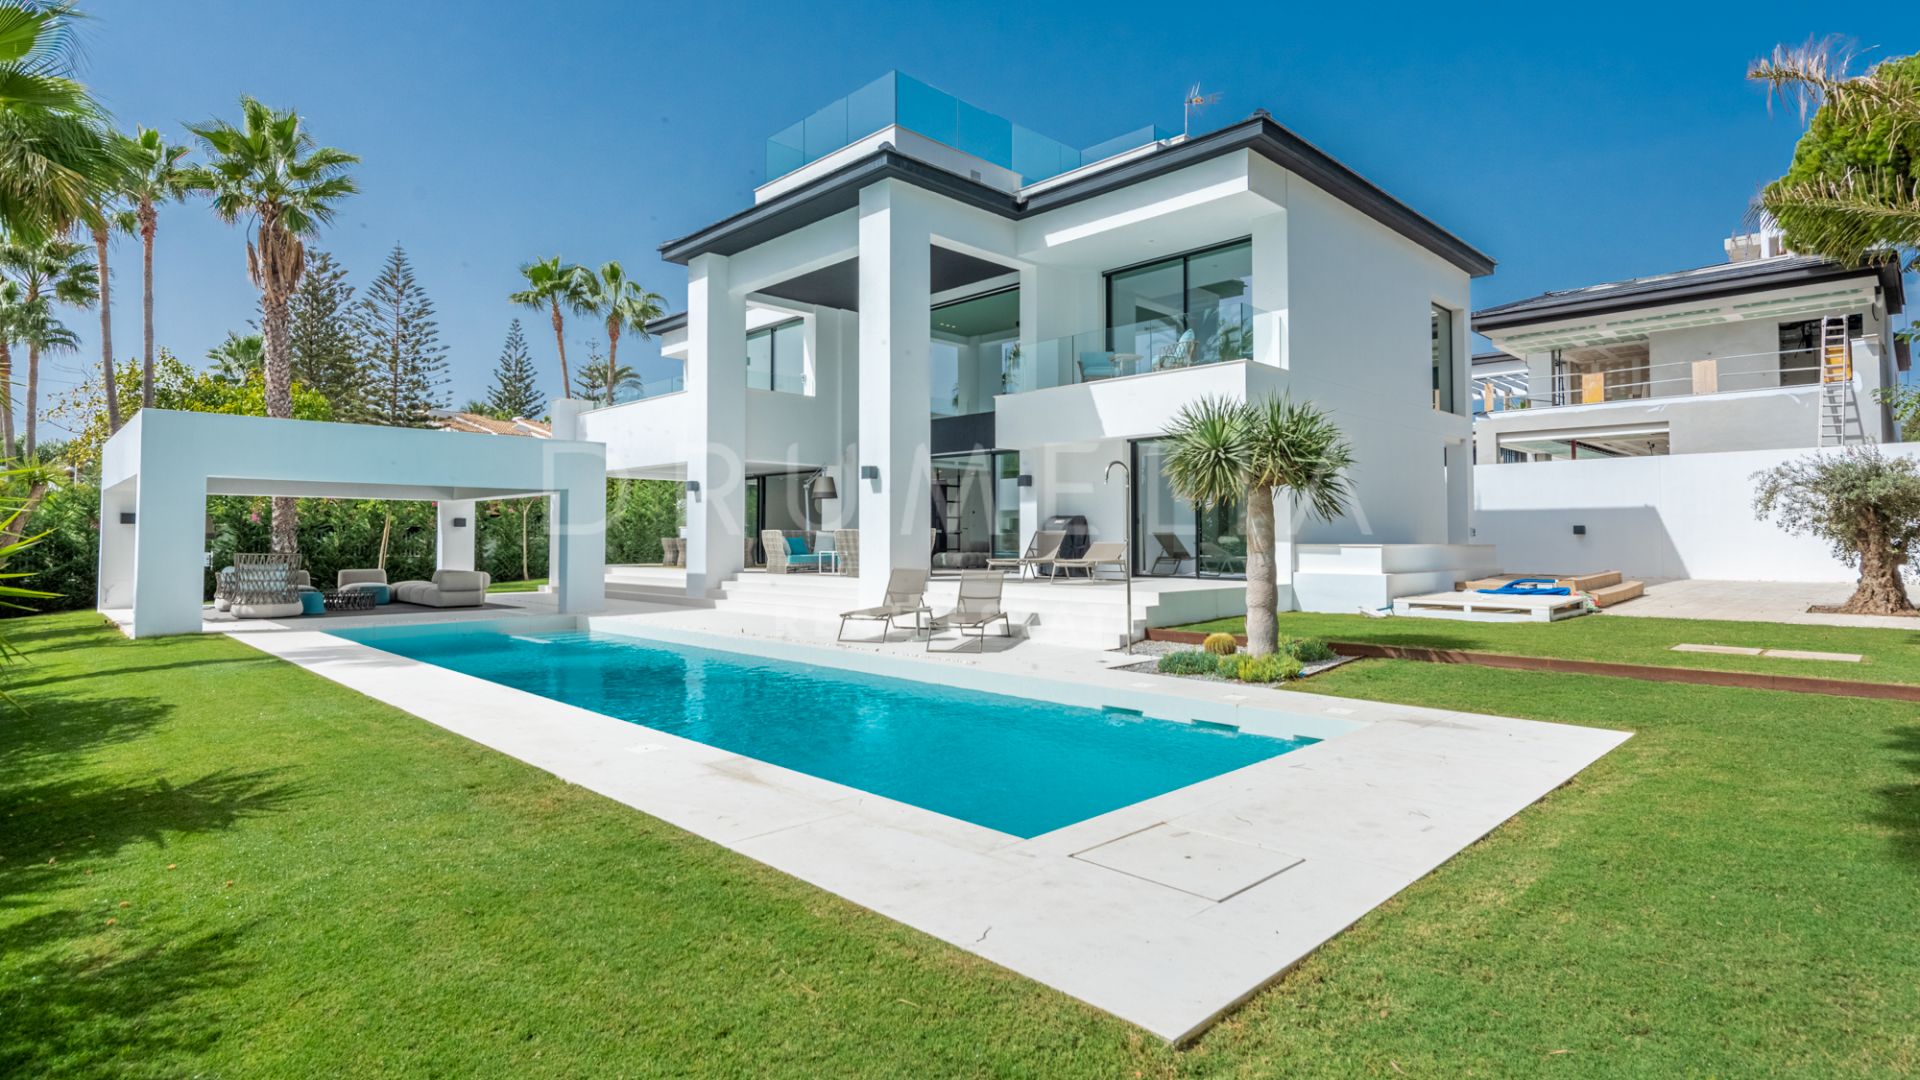 New front-line beach modern luxury villa with sea views in Cortijo Blanco, Marbella